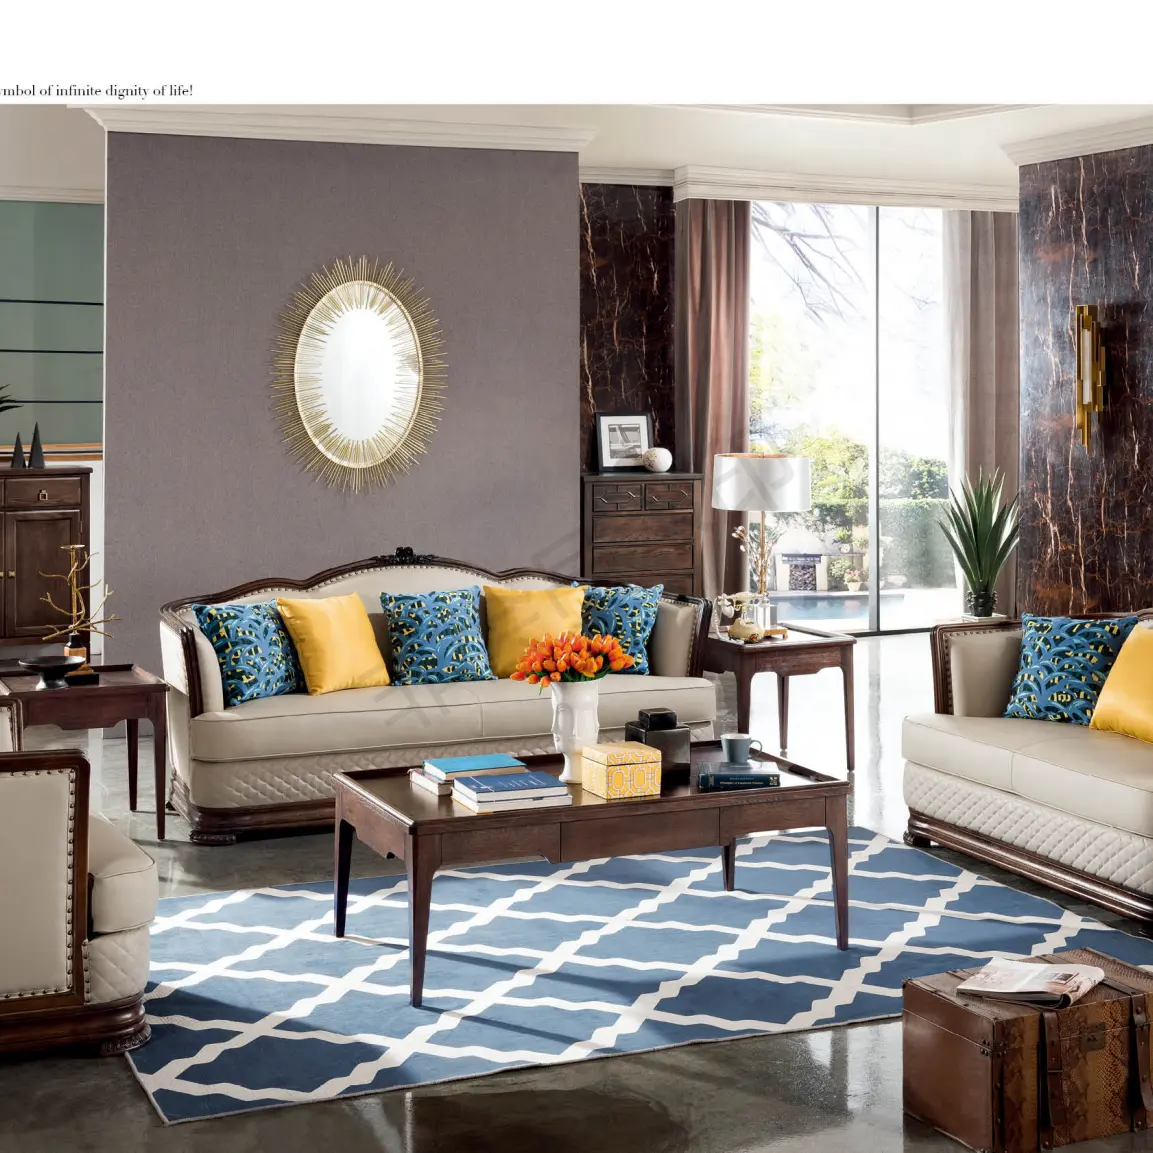 CBMmart European Style Modern Italian Designs Luxury Sofas Living Room Furniture For Home Hotel Restaurant Sofa Set